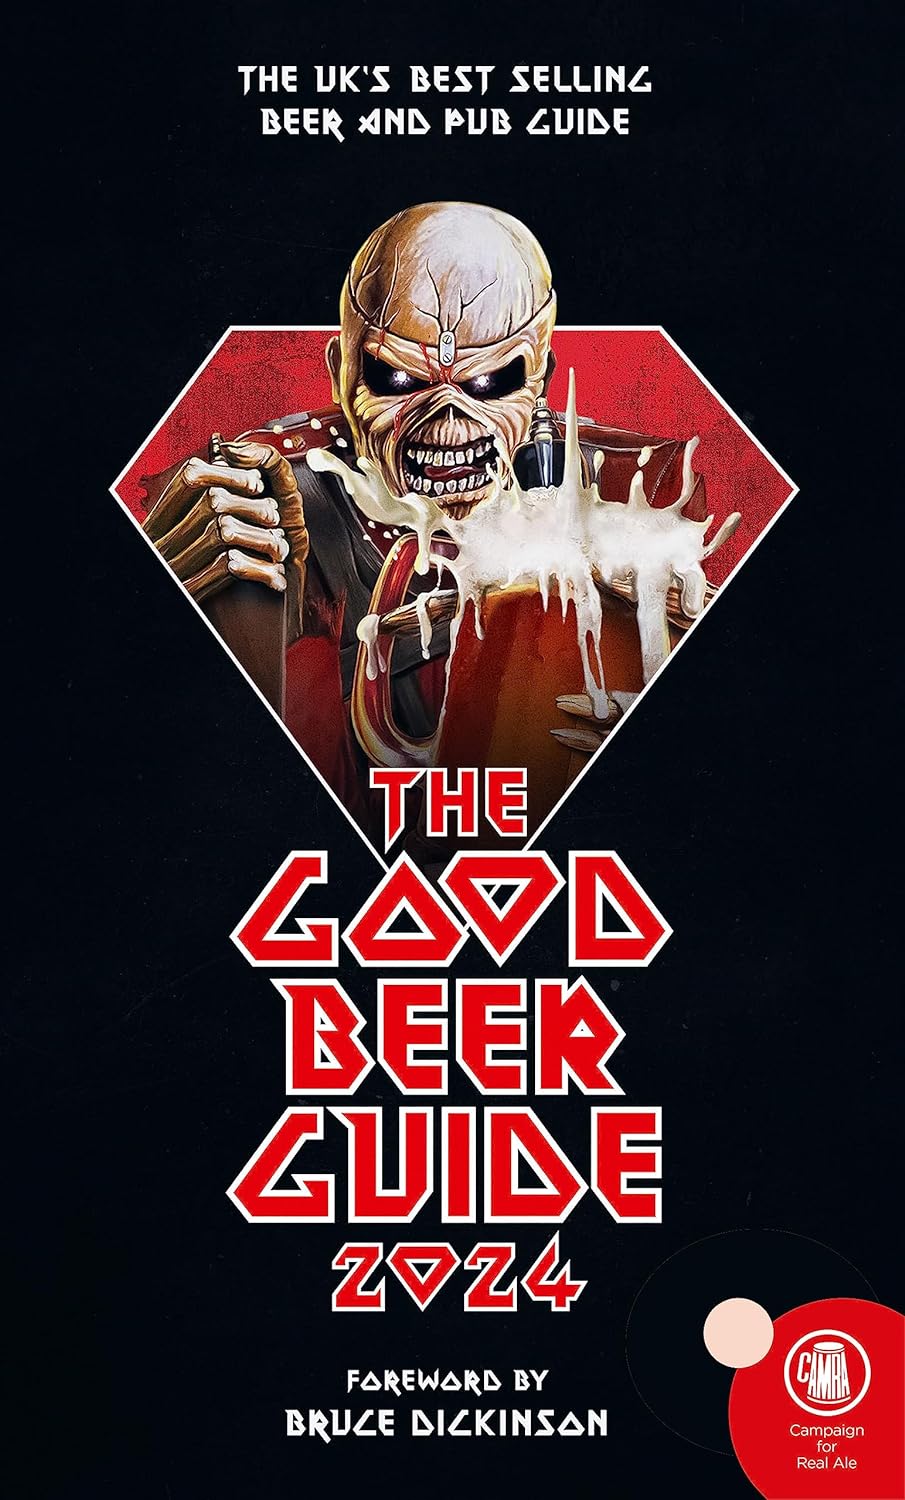 CAMRA Good Beer Guide 2024